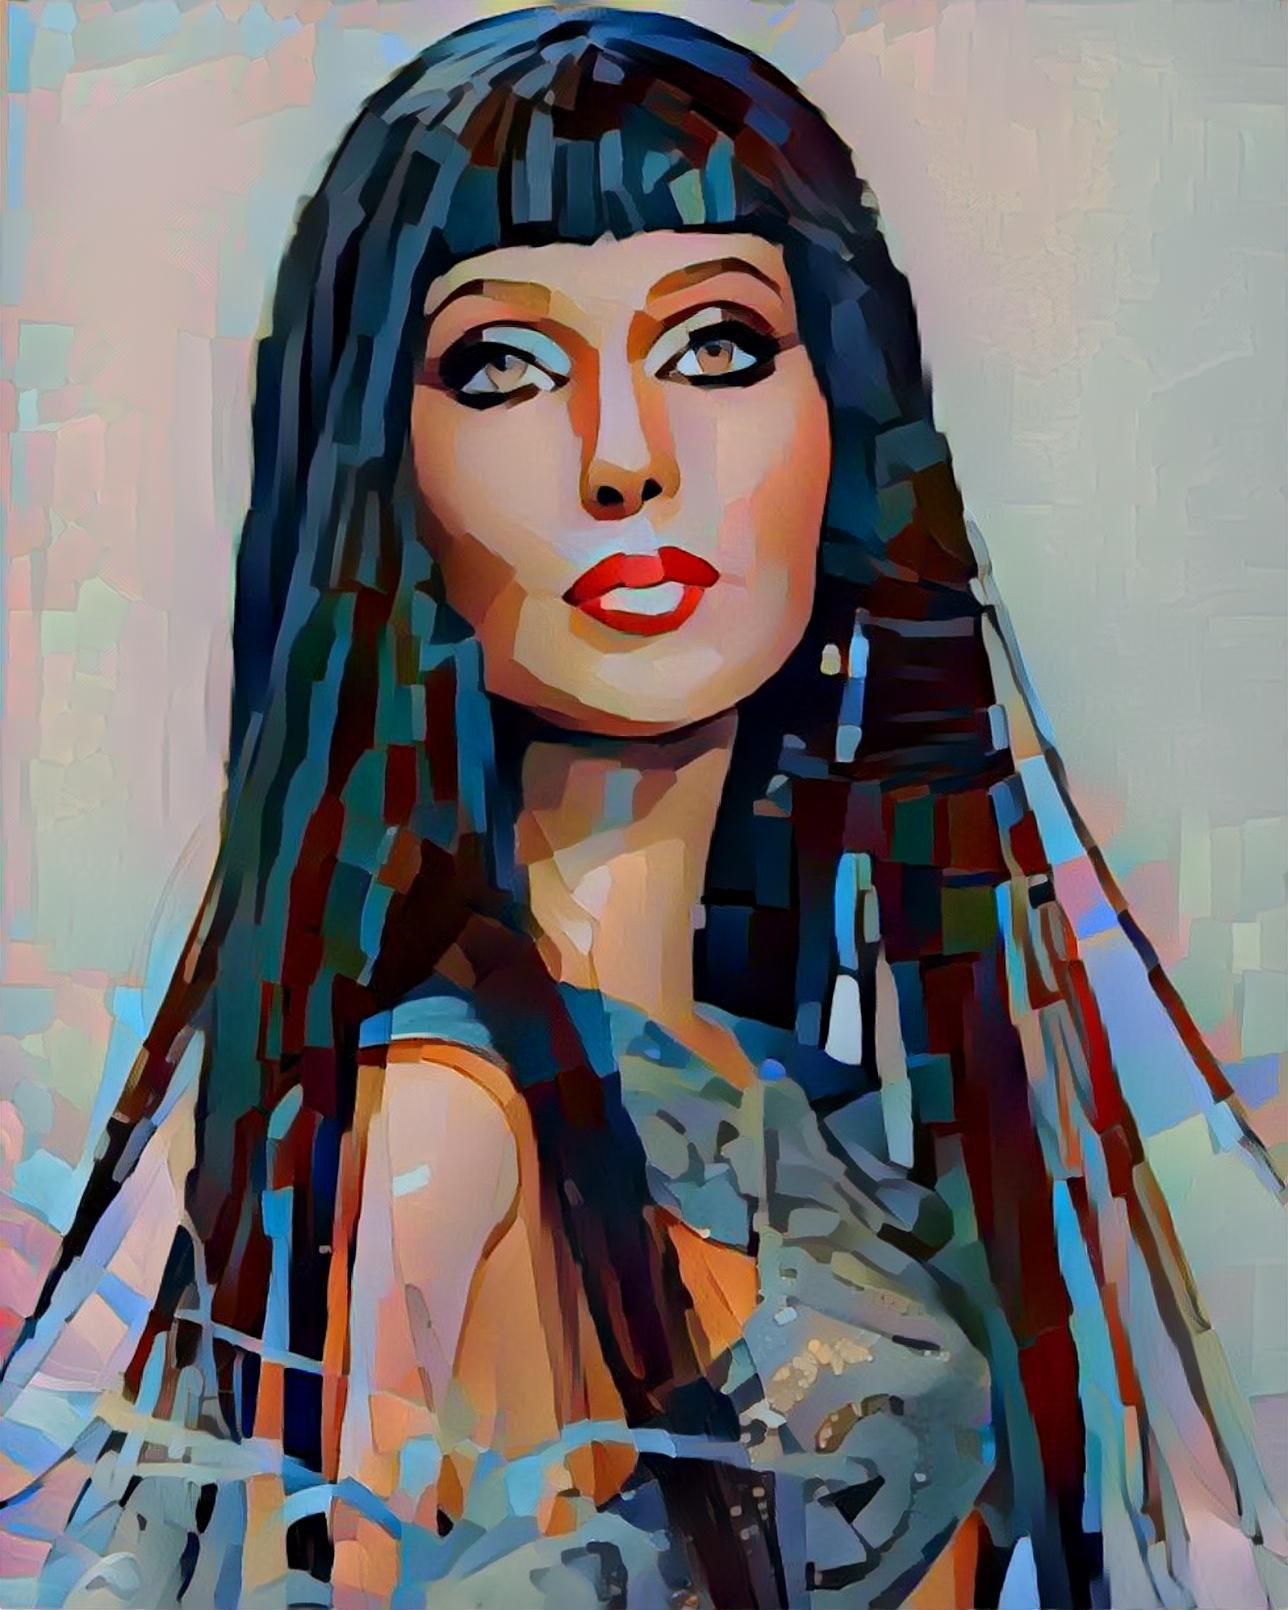 Cher 